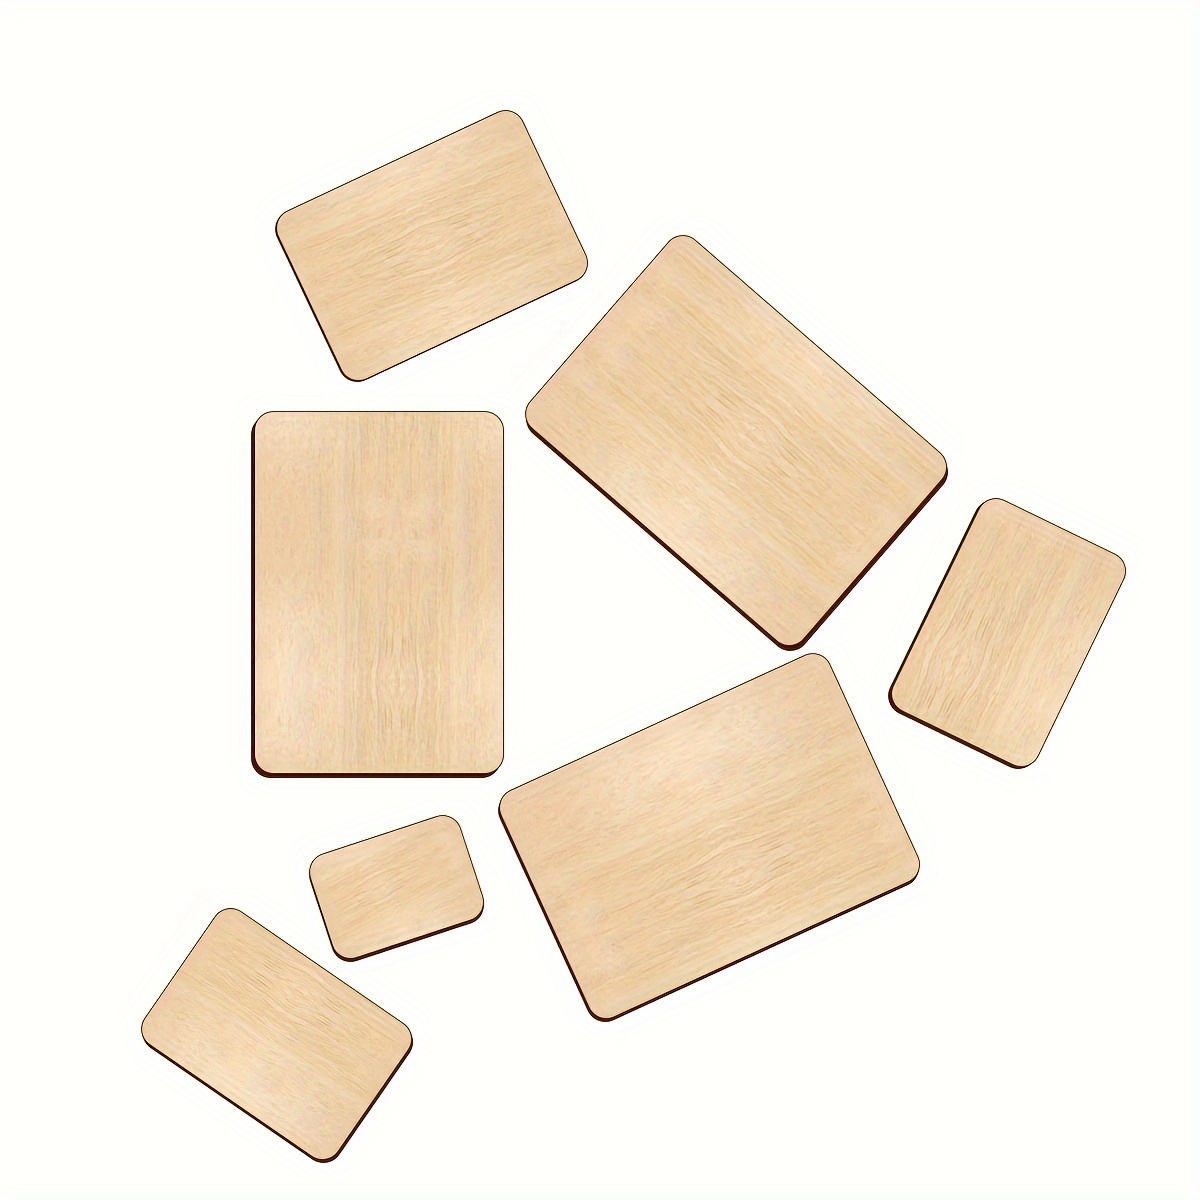 Cuadrados de madera para manualidades, 36 cuadrados de madera de 5 x 5,  recortes cuadrados de madera sin terminar para manualidades y manualidades,  5